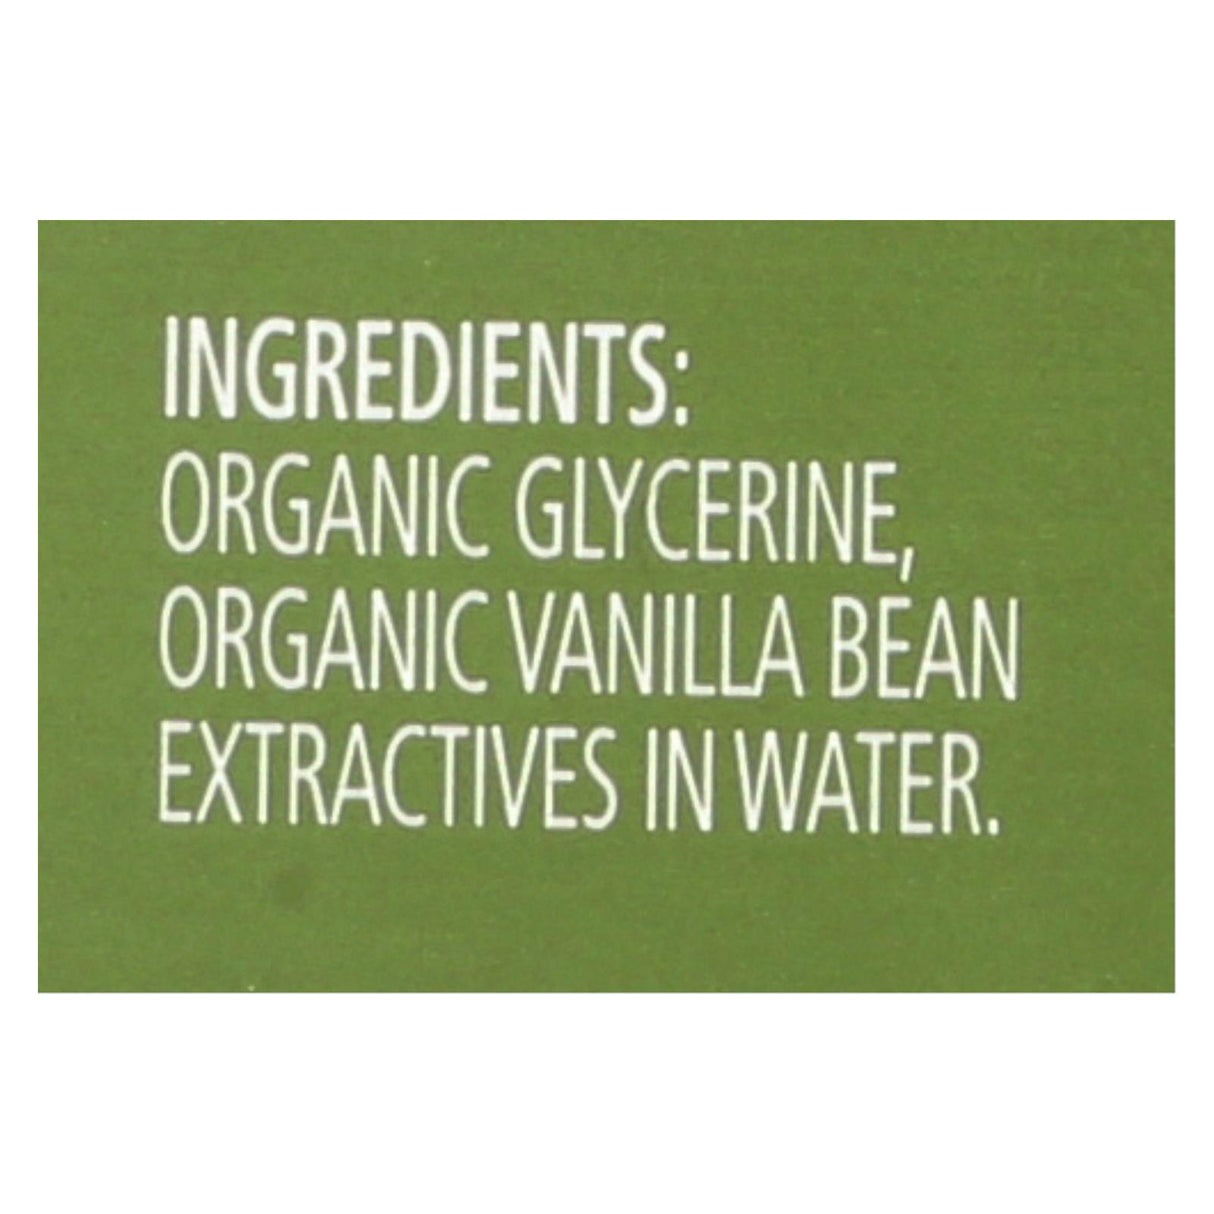 Simply Organic Vanilla Flavoring - 4 Oz, Pack of 6 - Cozy Farm 